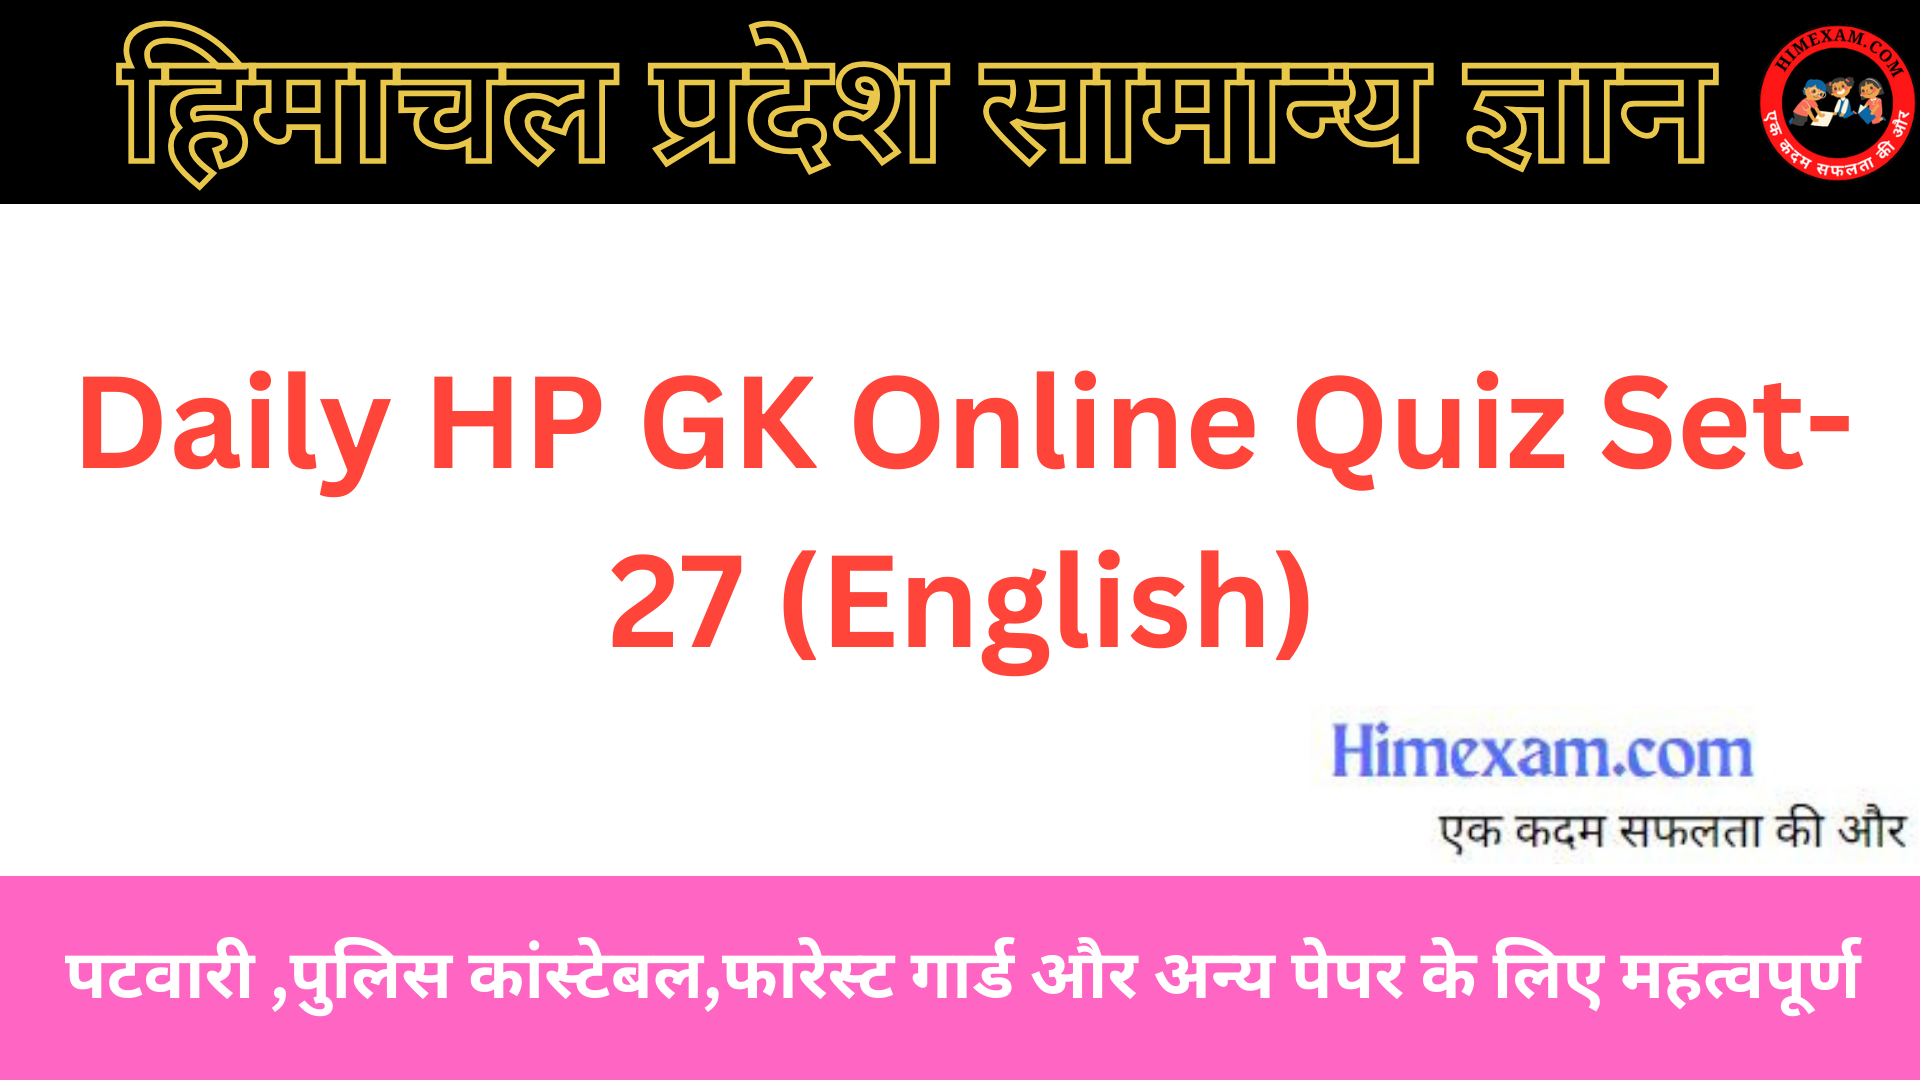 Daily HP GK Online Quiz Set-27 (English)